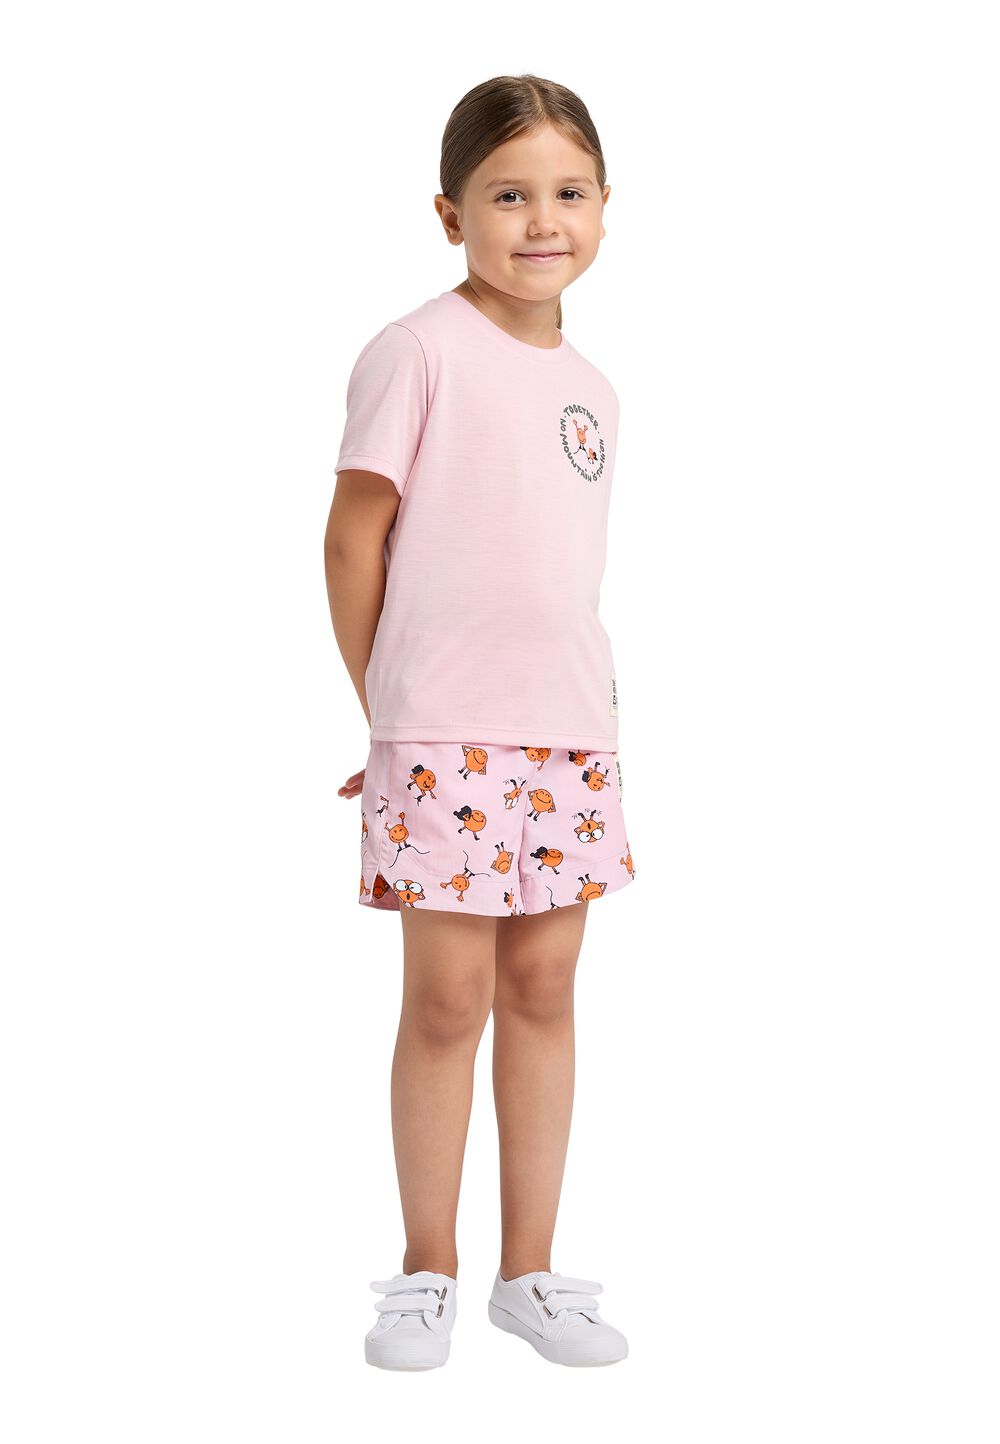 Jack Wolfskin Smileyworld Together T-Shirt Kids Functioneel shirt Kinderen 104 water lily water lily